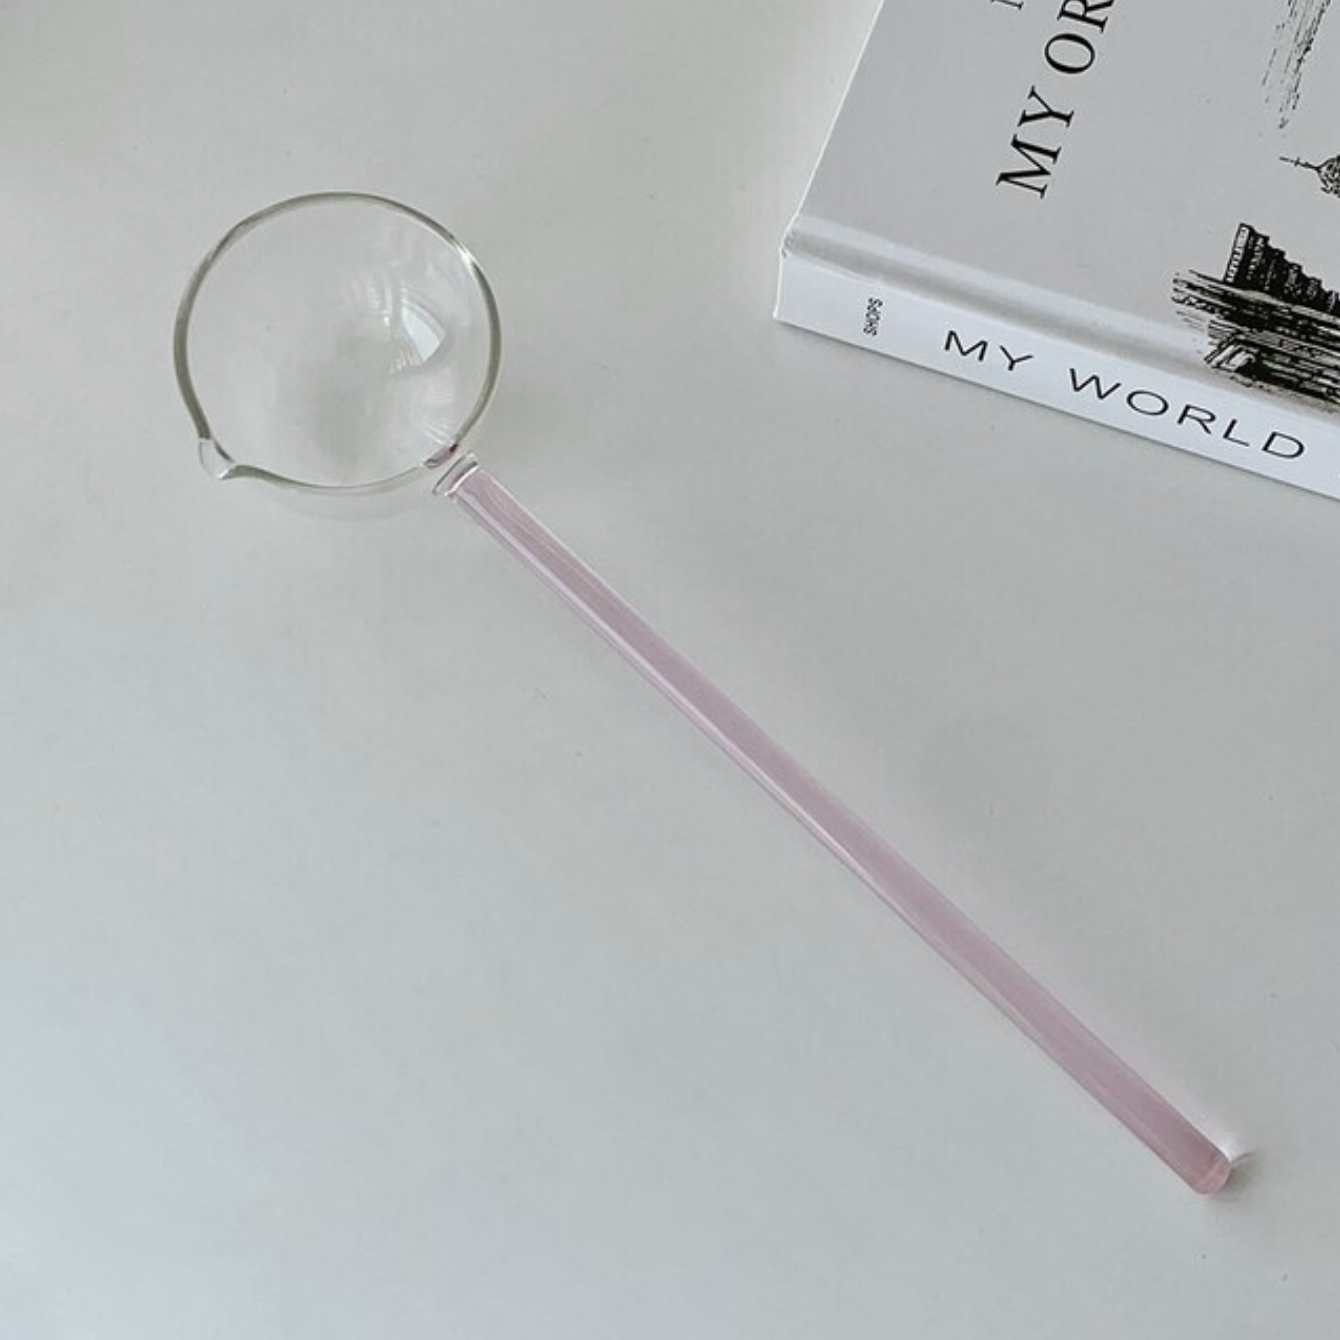 Bubble Glass Spoon